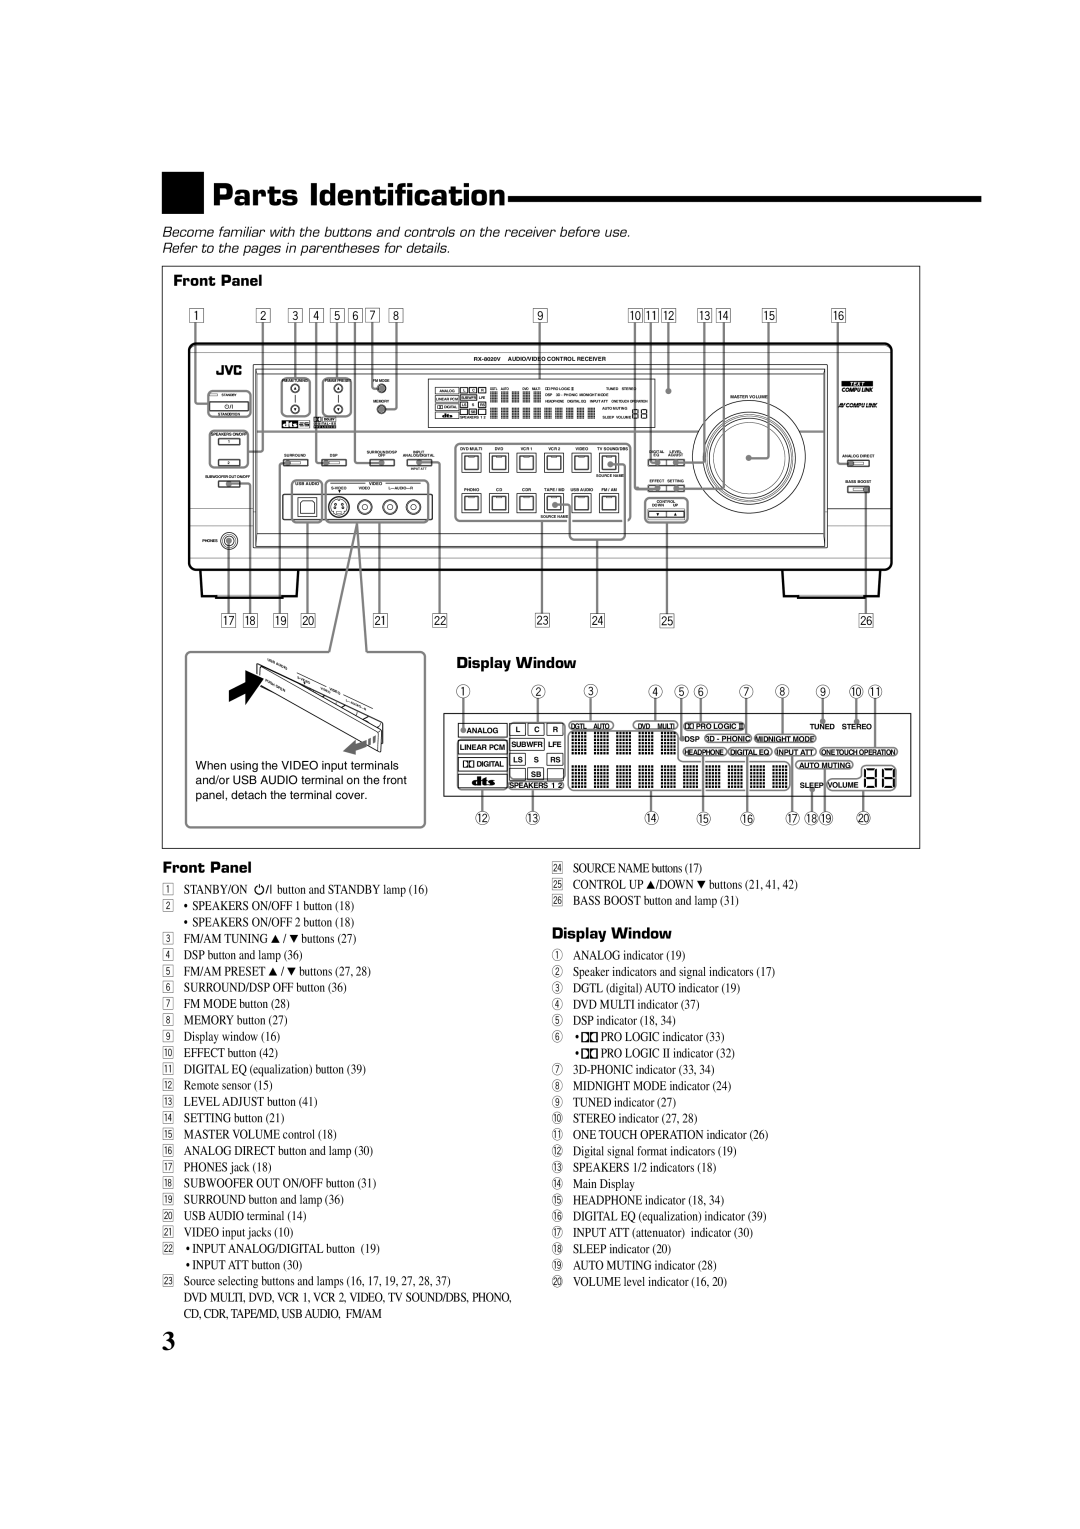 JVC RX-8020VBK manual 2 3 4 5 67, pqw e r t, u i o, @ # $ %, Parts Identification, Display Window 